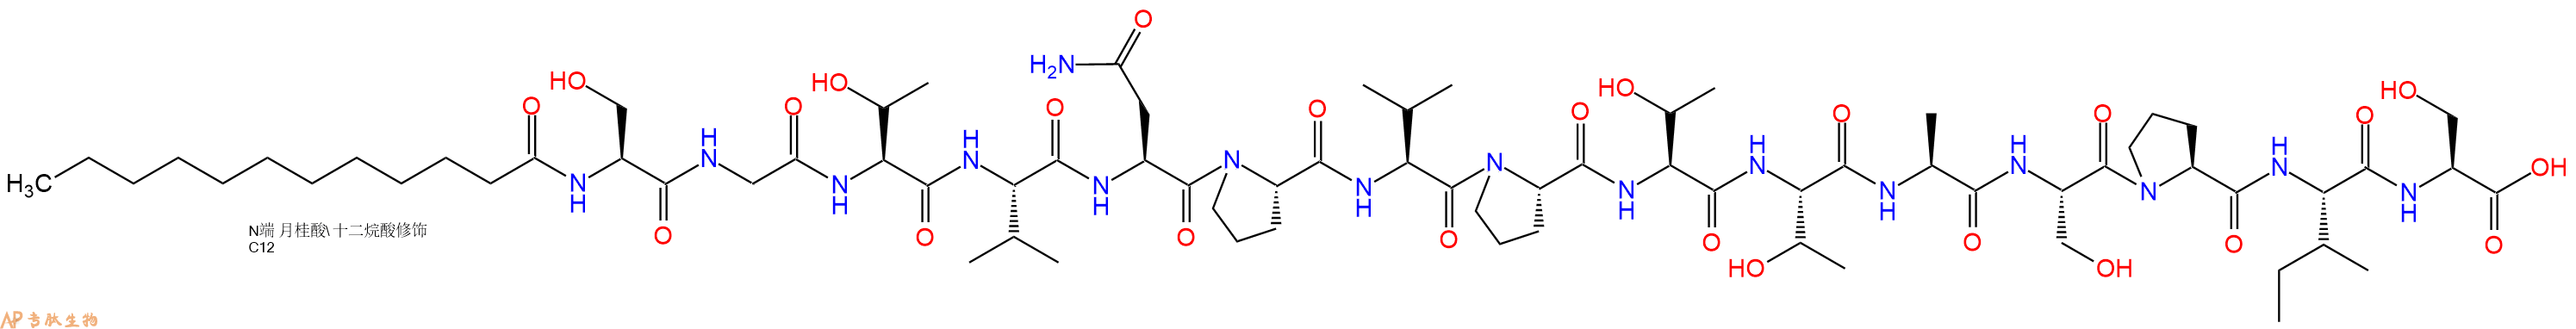 专肽生物产品Lauricacid-Ser-Gly-Thr-Val-Asn-Pro-Val-Pro-Thr-Thr